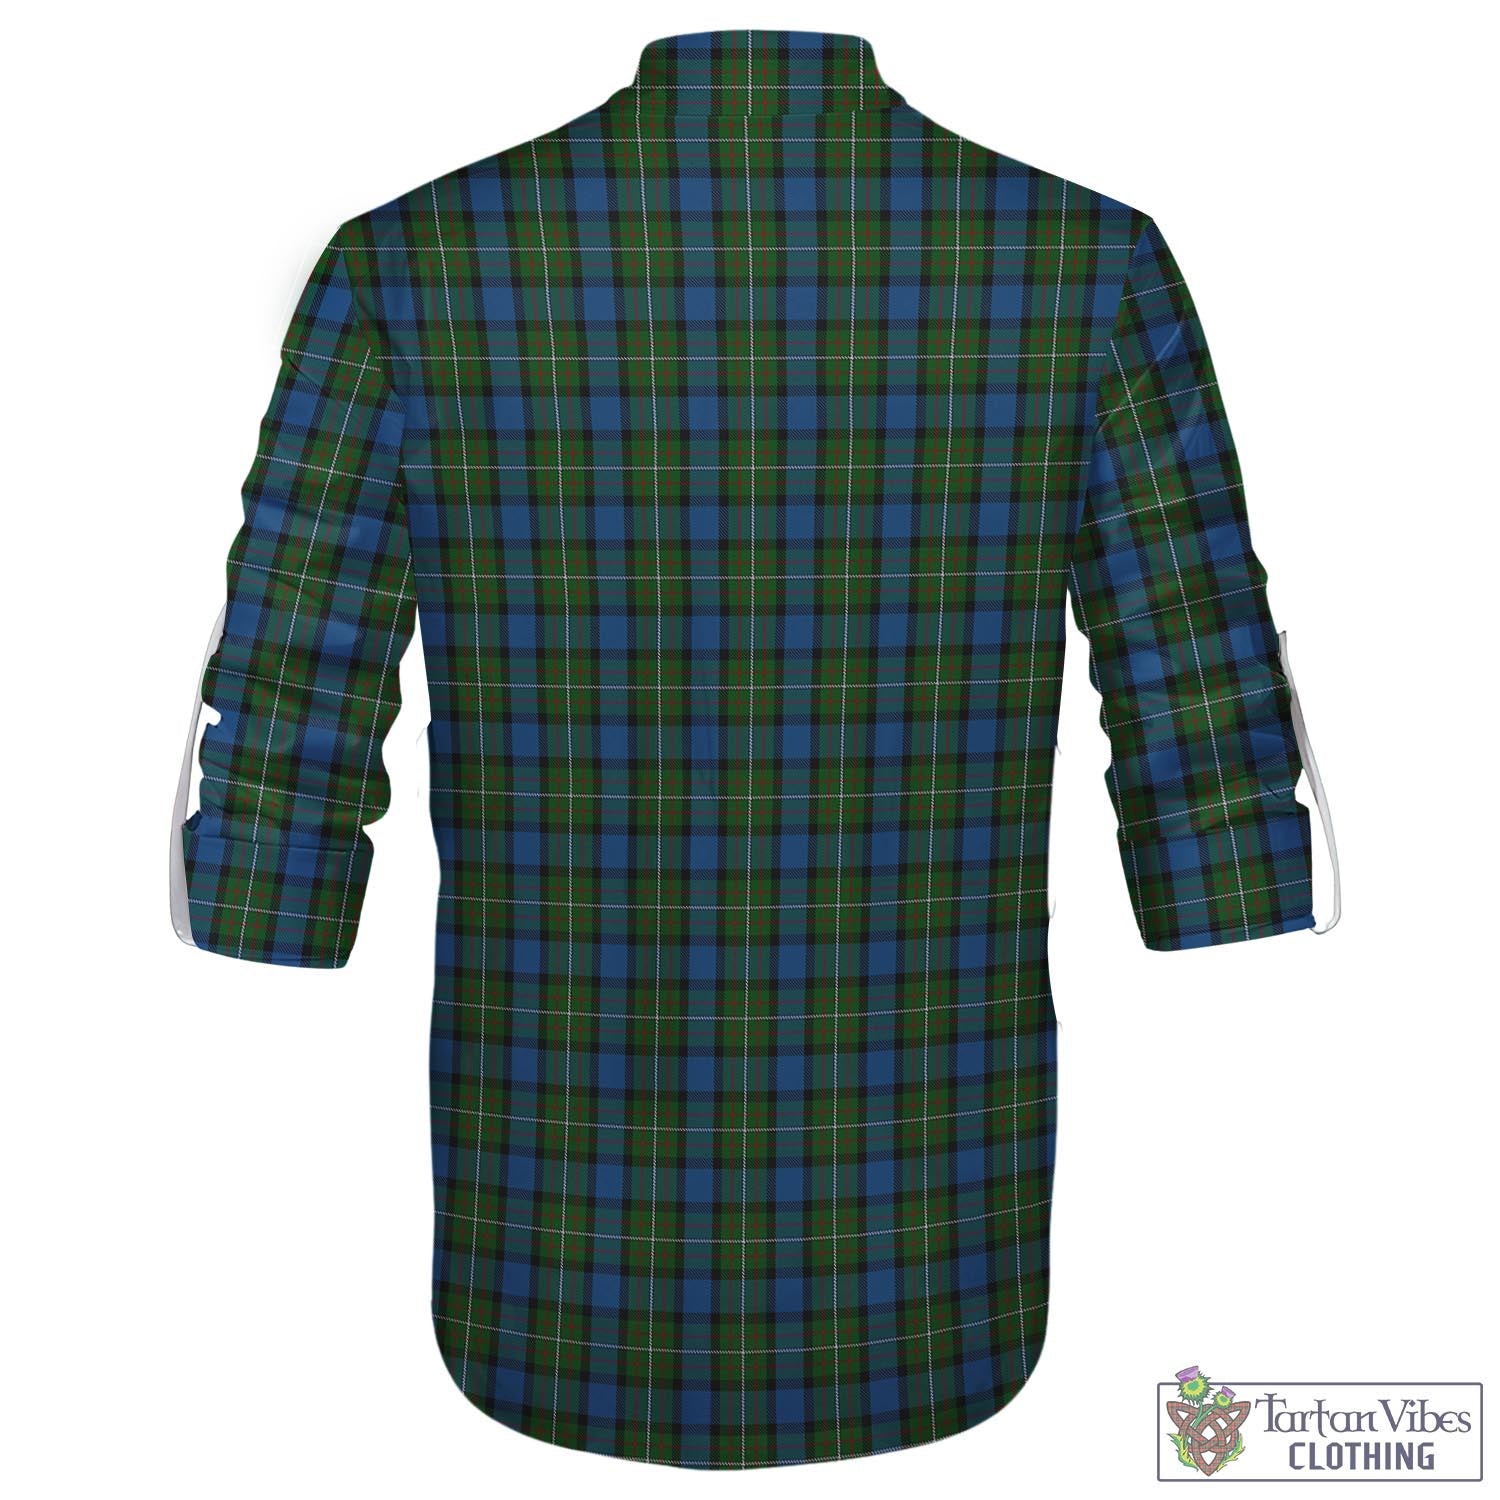 Tartan Vibes Clothing Ferguson of Atholl Tartan Men's Scottish Traditional Jacobite Ghillie Kilt Shirt with Family Crest